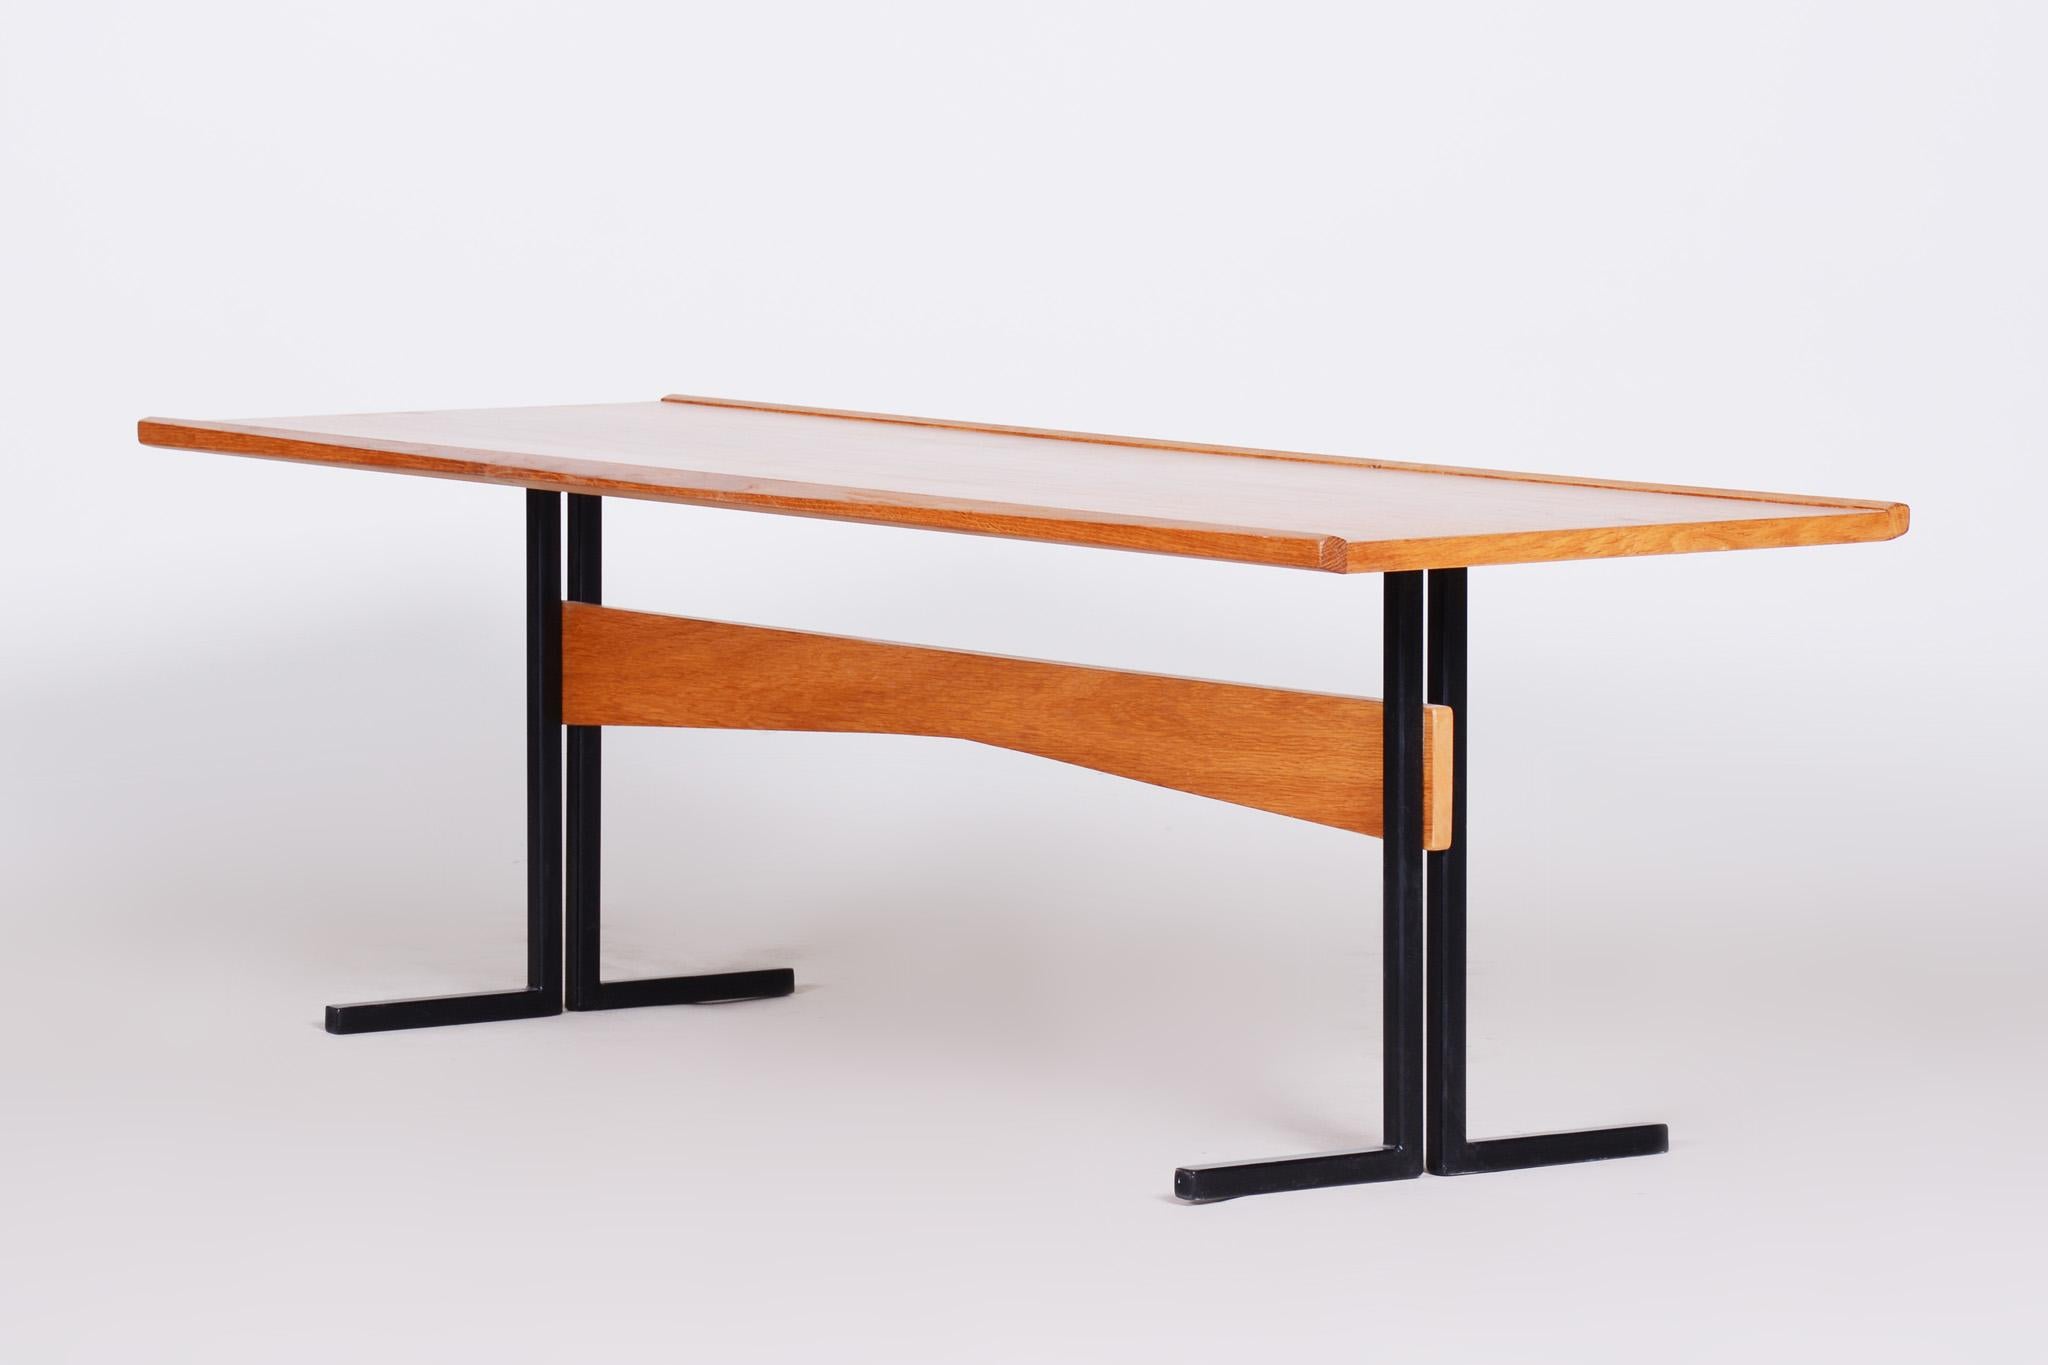 Original Rectangular Ash and Steel Table, Czech Mid-Century Modern, 1960s For Sale 1